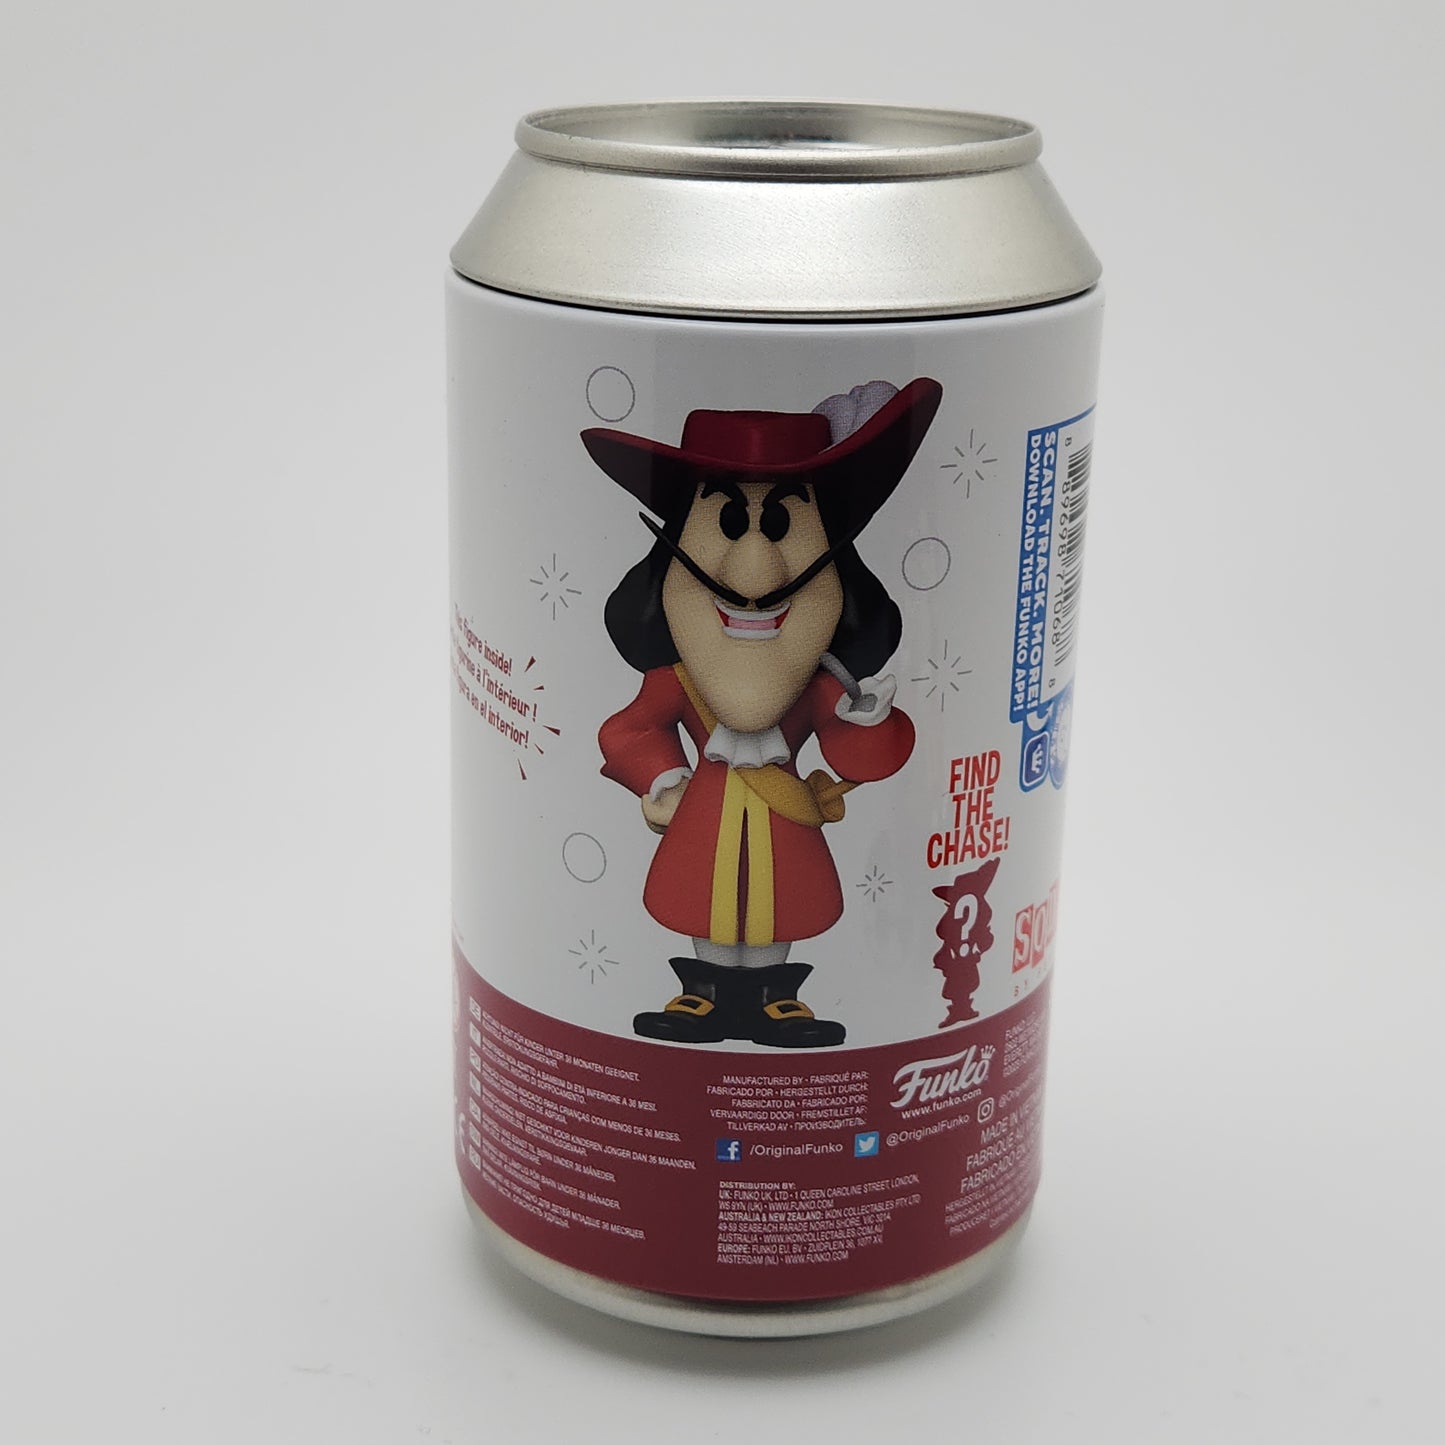 Funko Soda- Captain Hook (Disney)